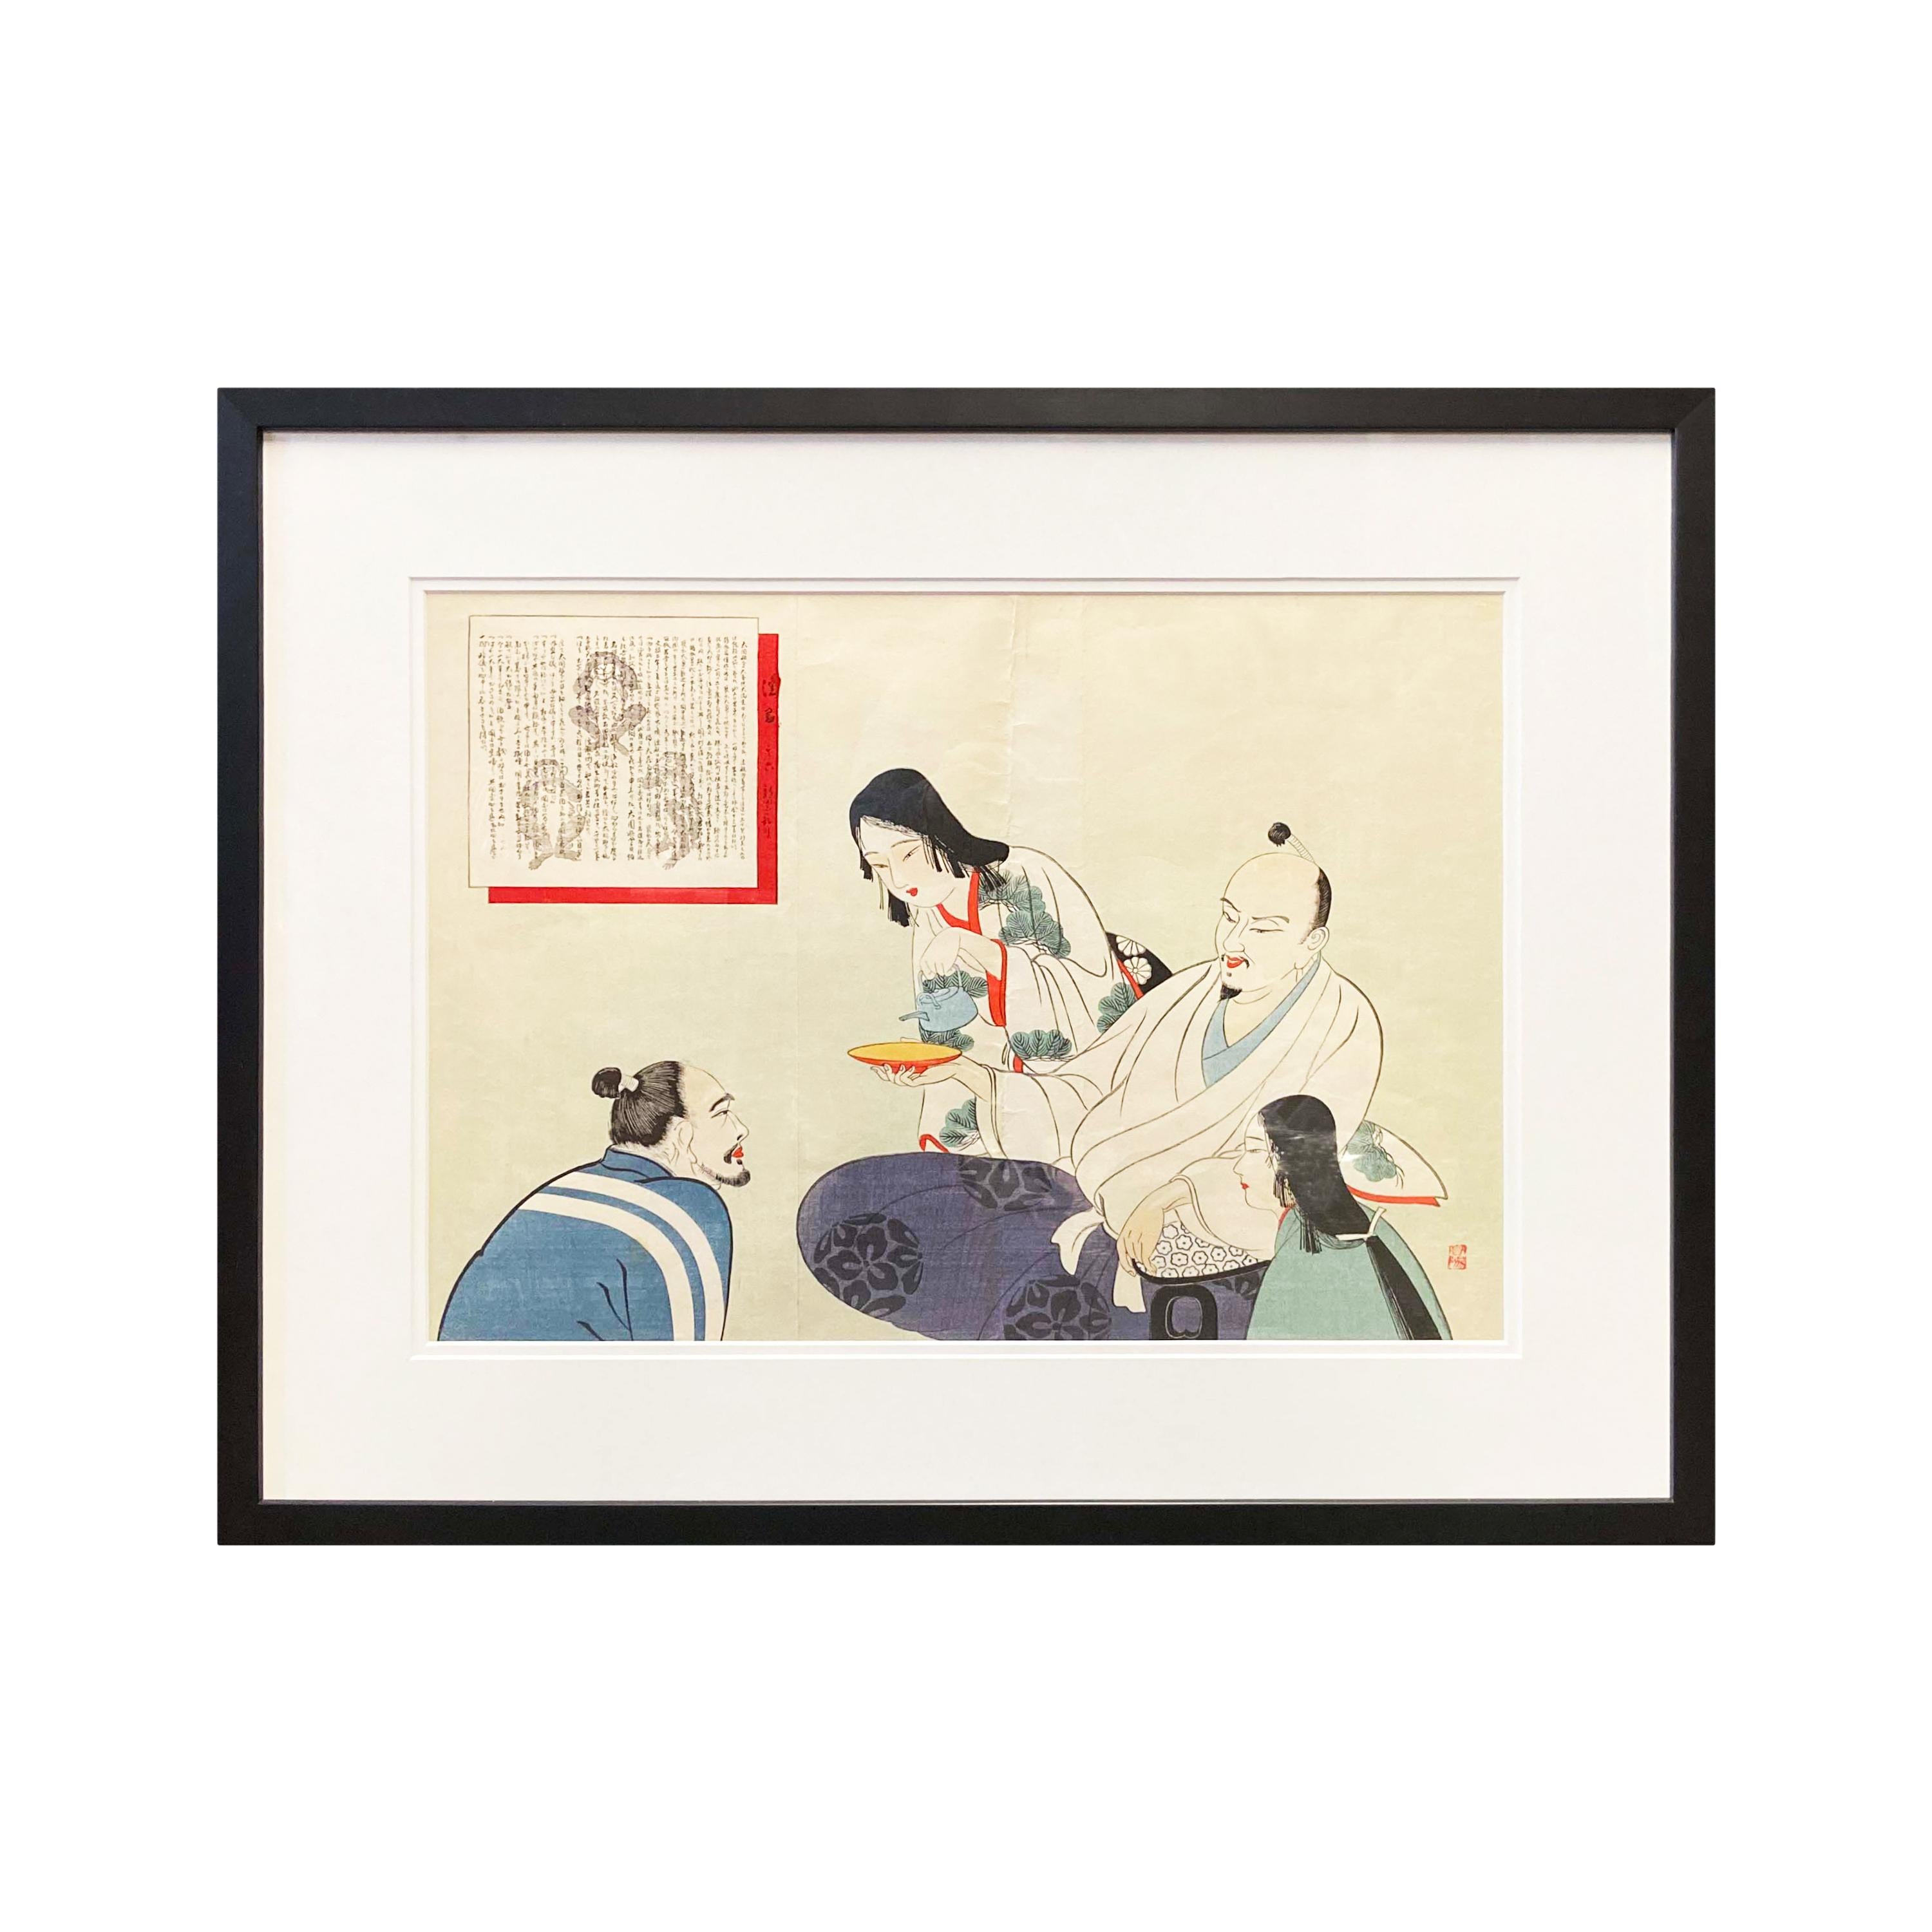 19th Century Japanese Woodblock Print Depicting Monks Having Tea, in Black Frame For Sale 1